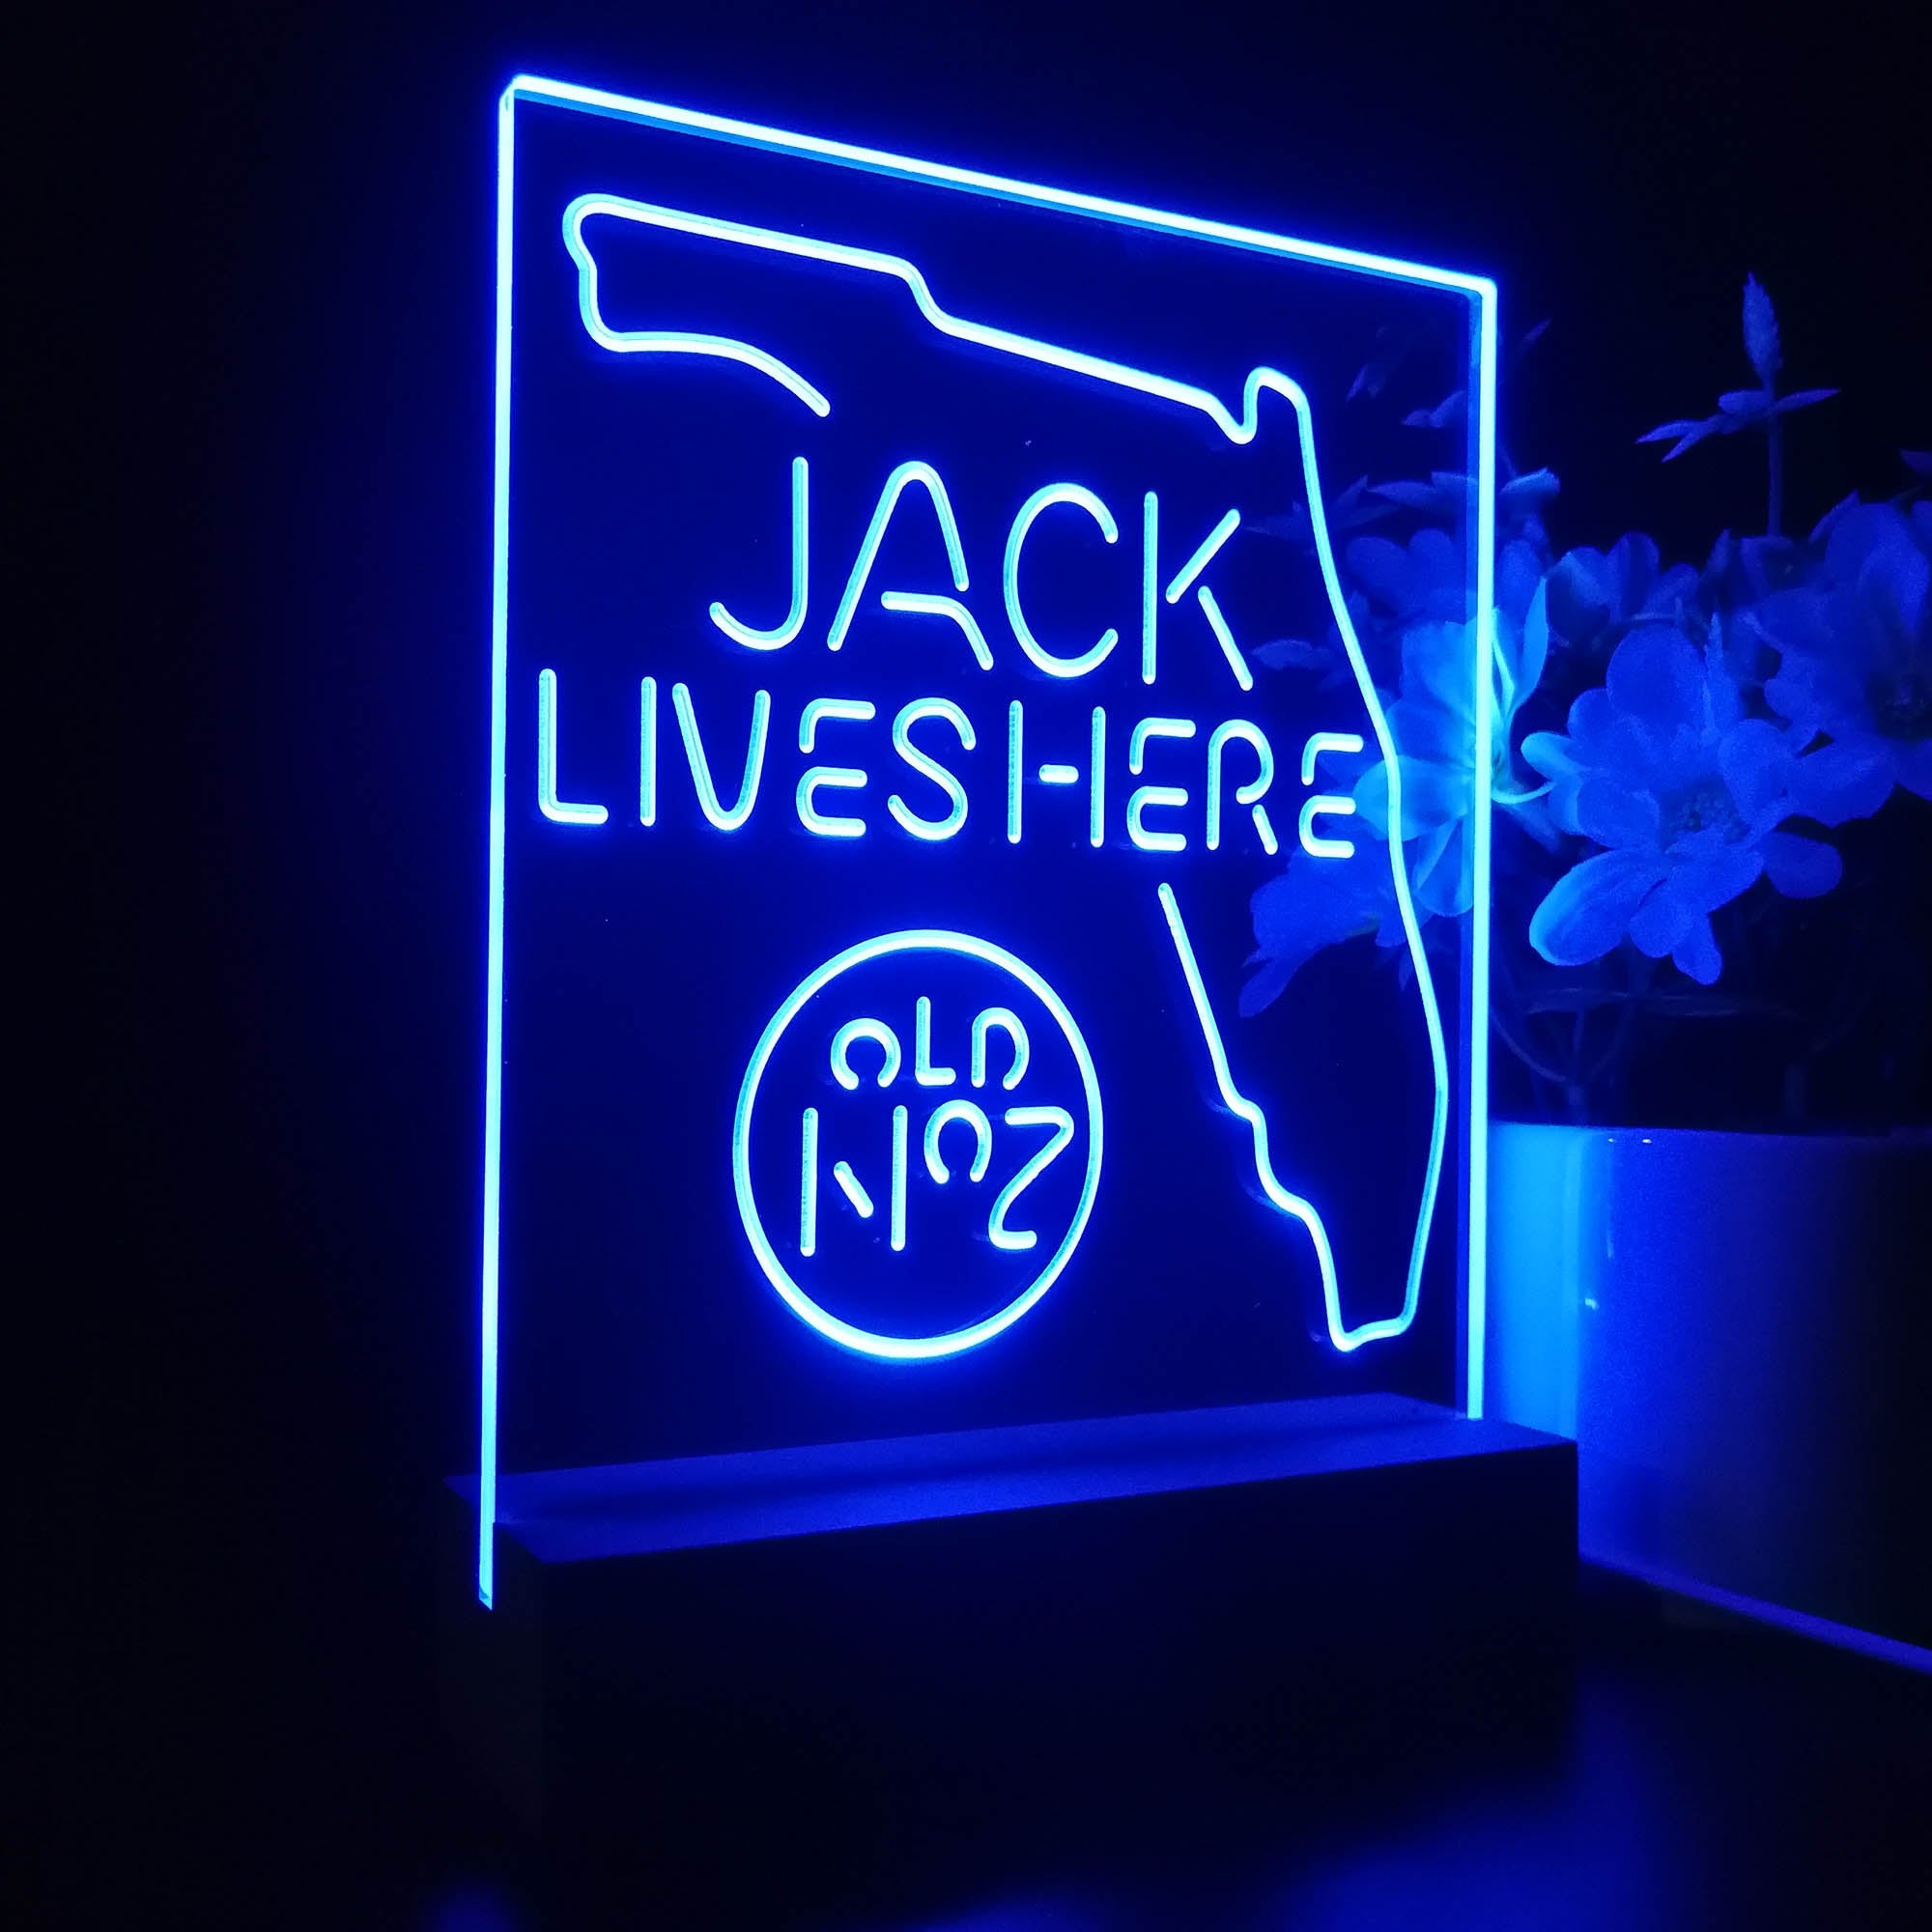 Florida Jack Lives Here Night Light Neon Pub Bar Lamp